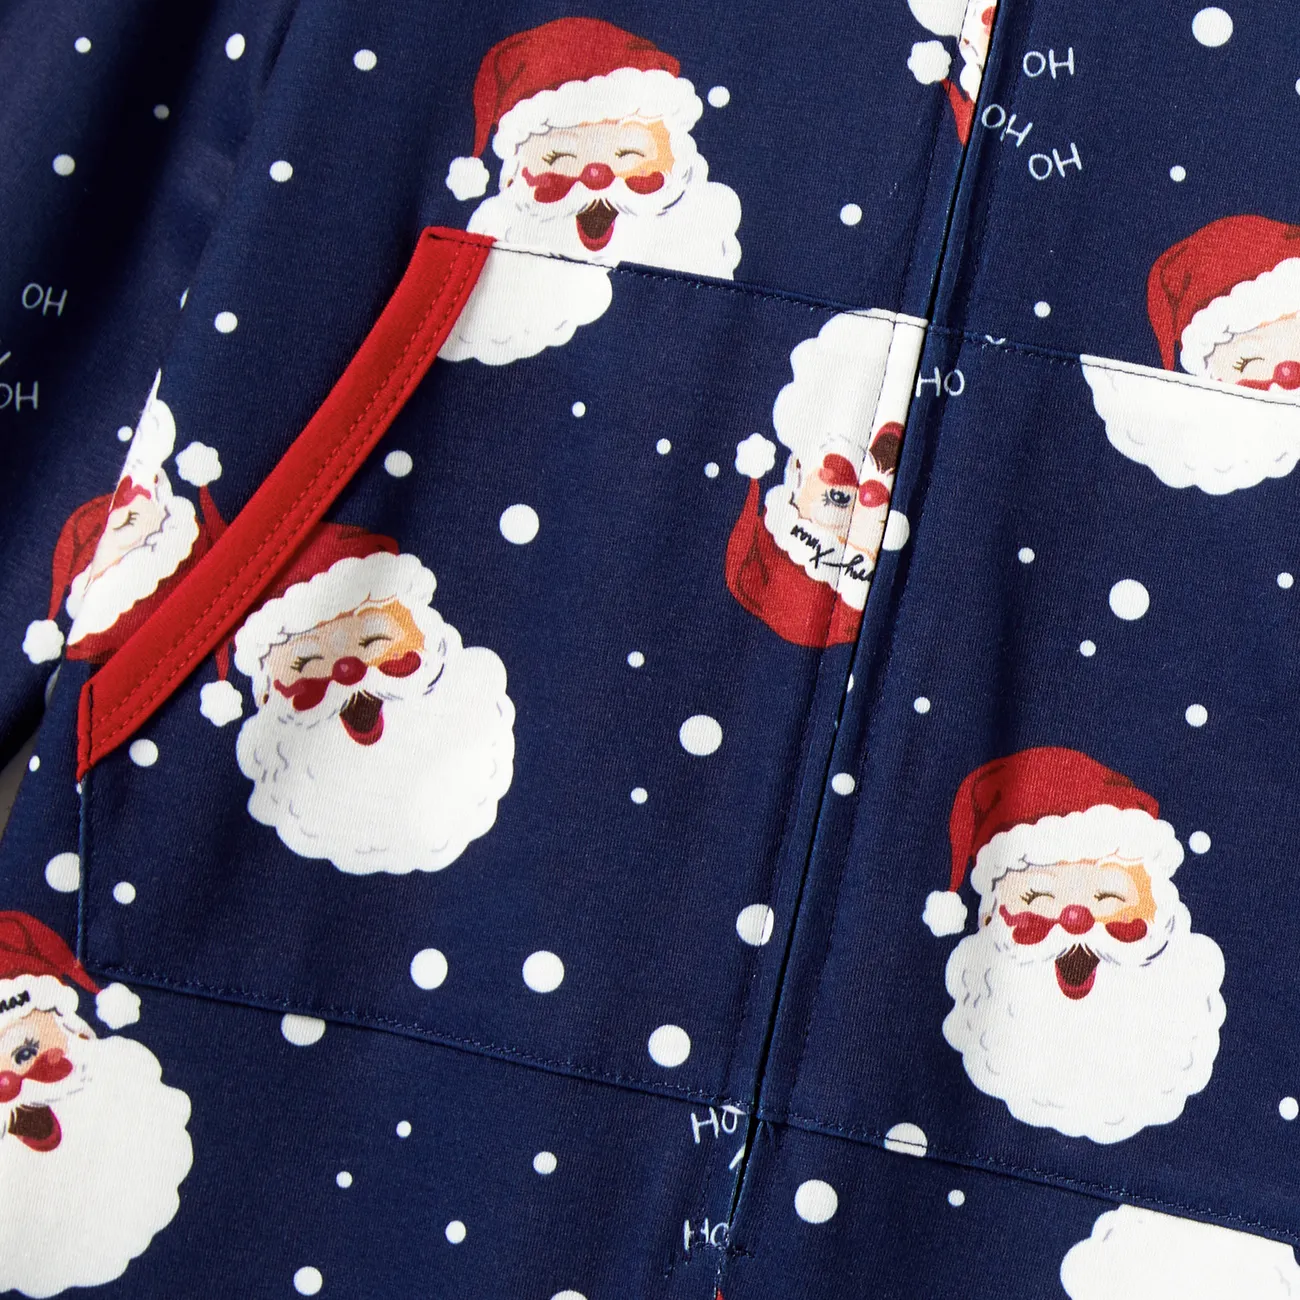 Navidad Looks familiares Manga larga Conjuntos combinados para familia Pijamas (Flame Resistant) Azul big image 1